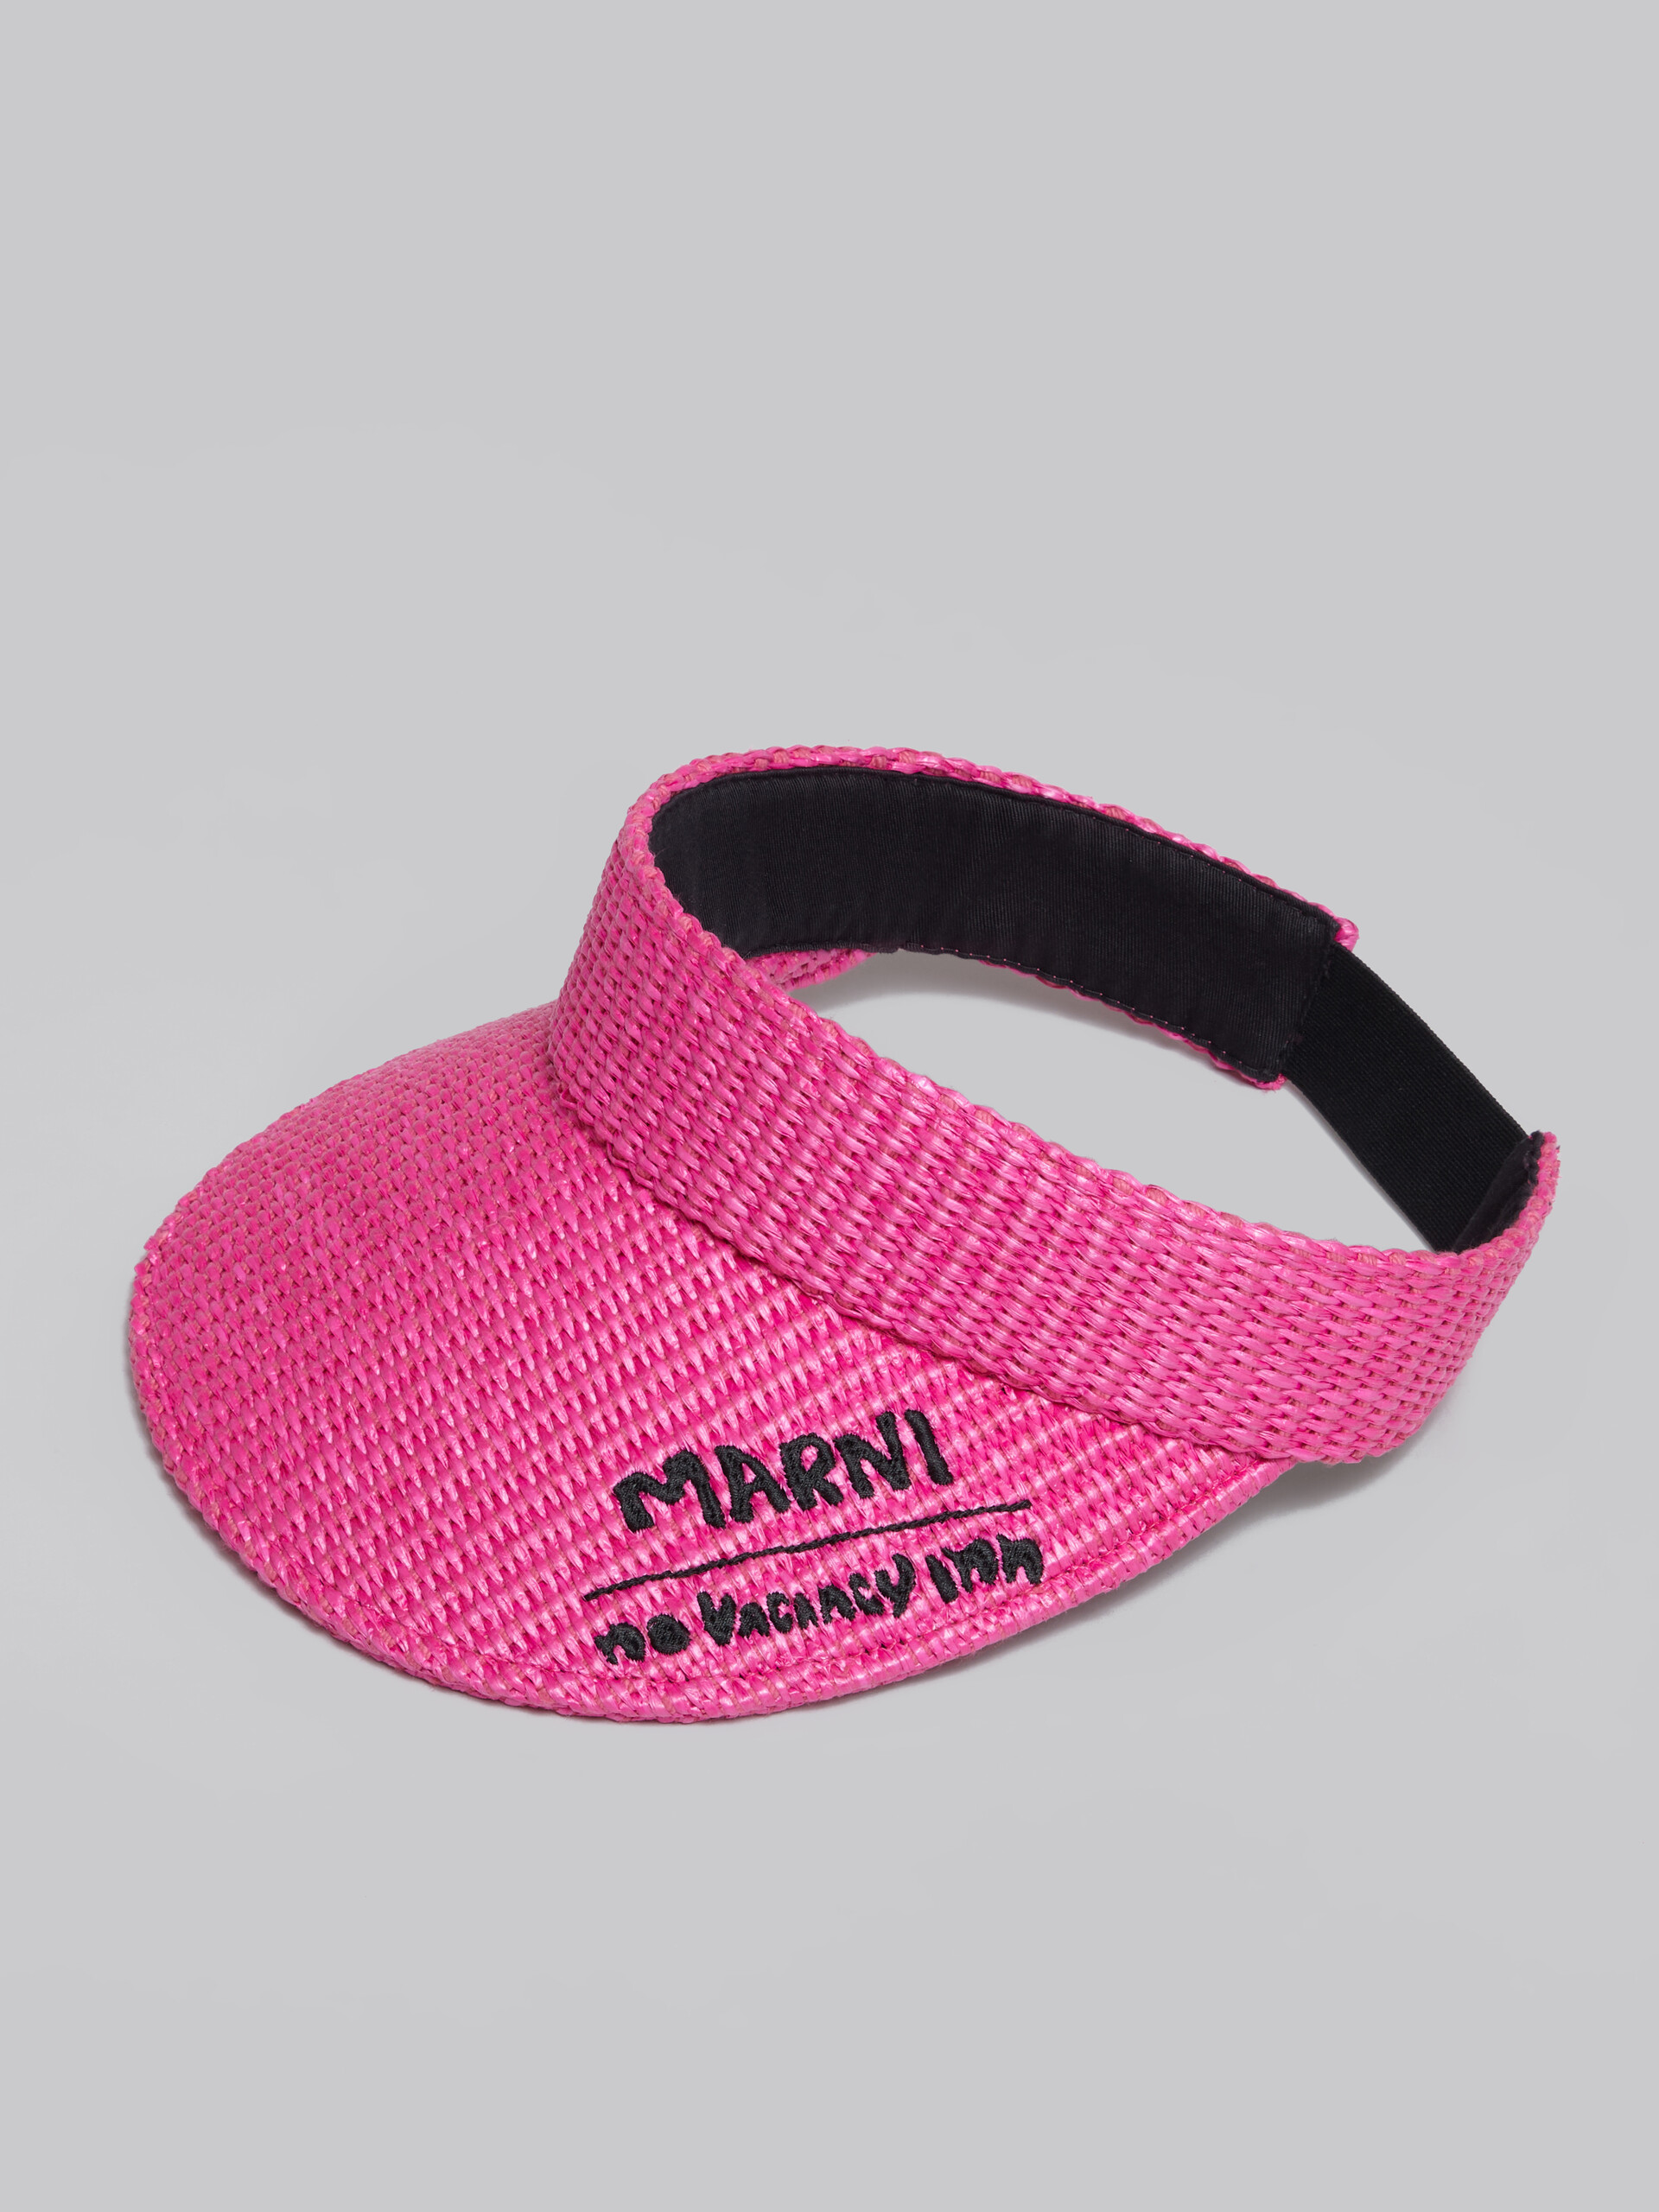 Marni x No Vacancy Inn - Fuchsia visor in raffia fabric - Hats - Image 4